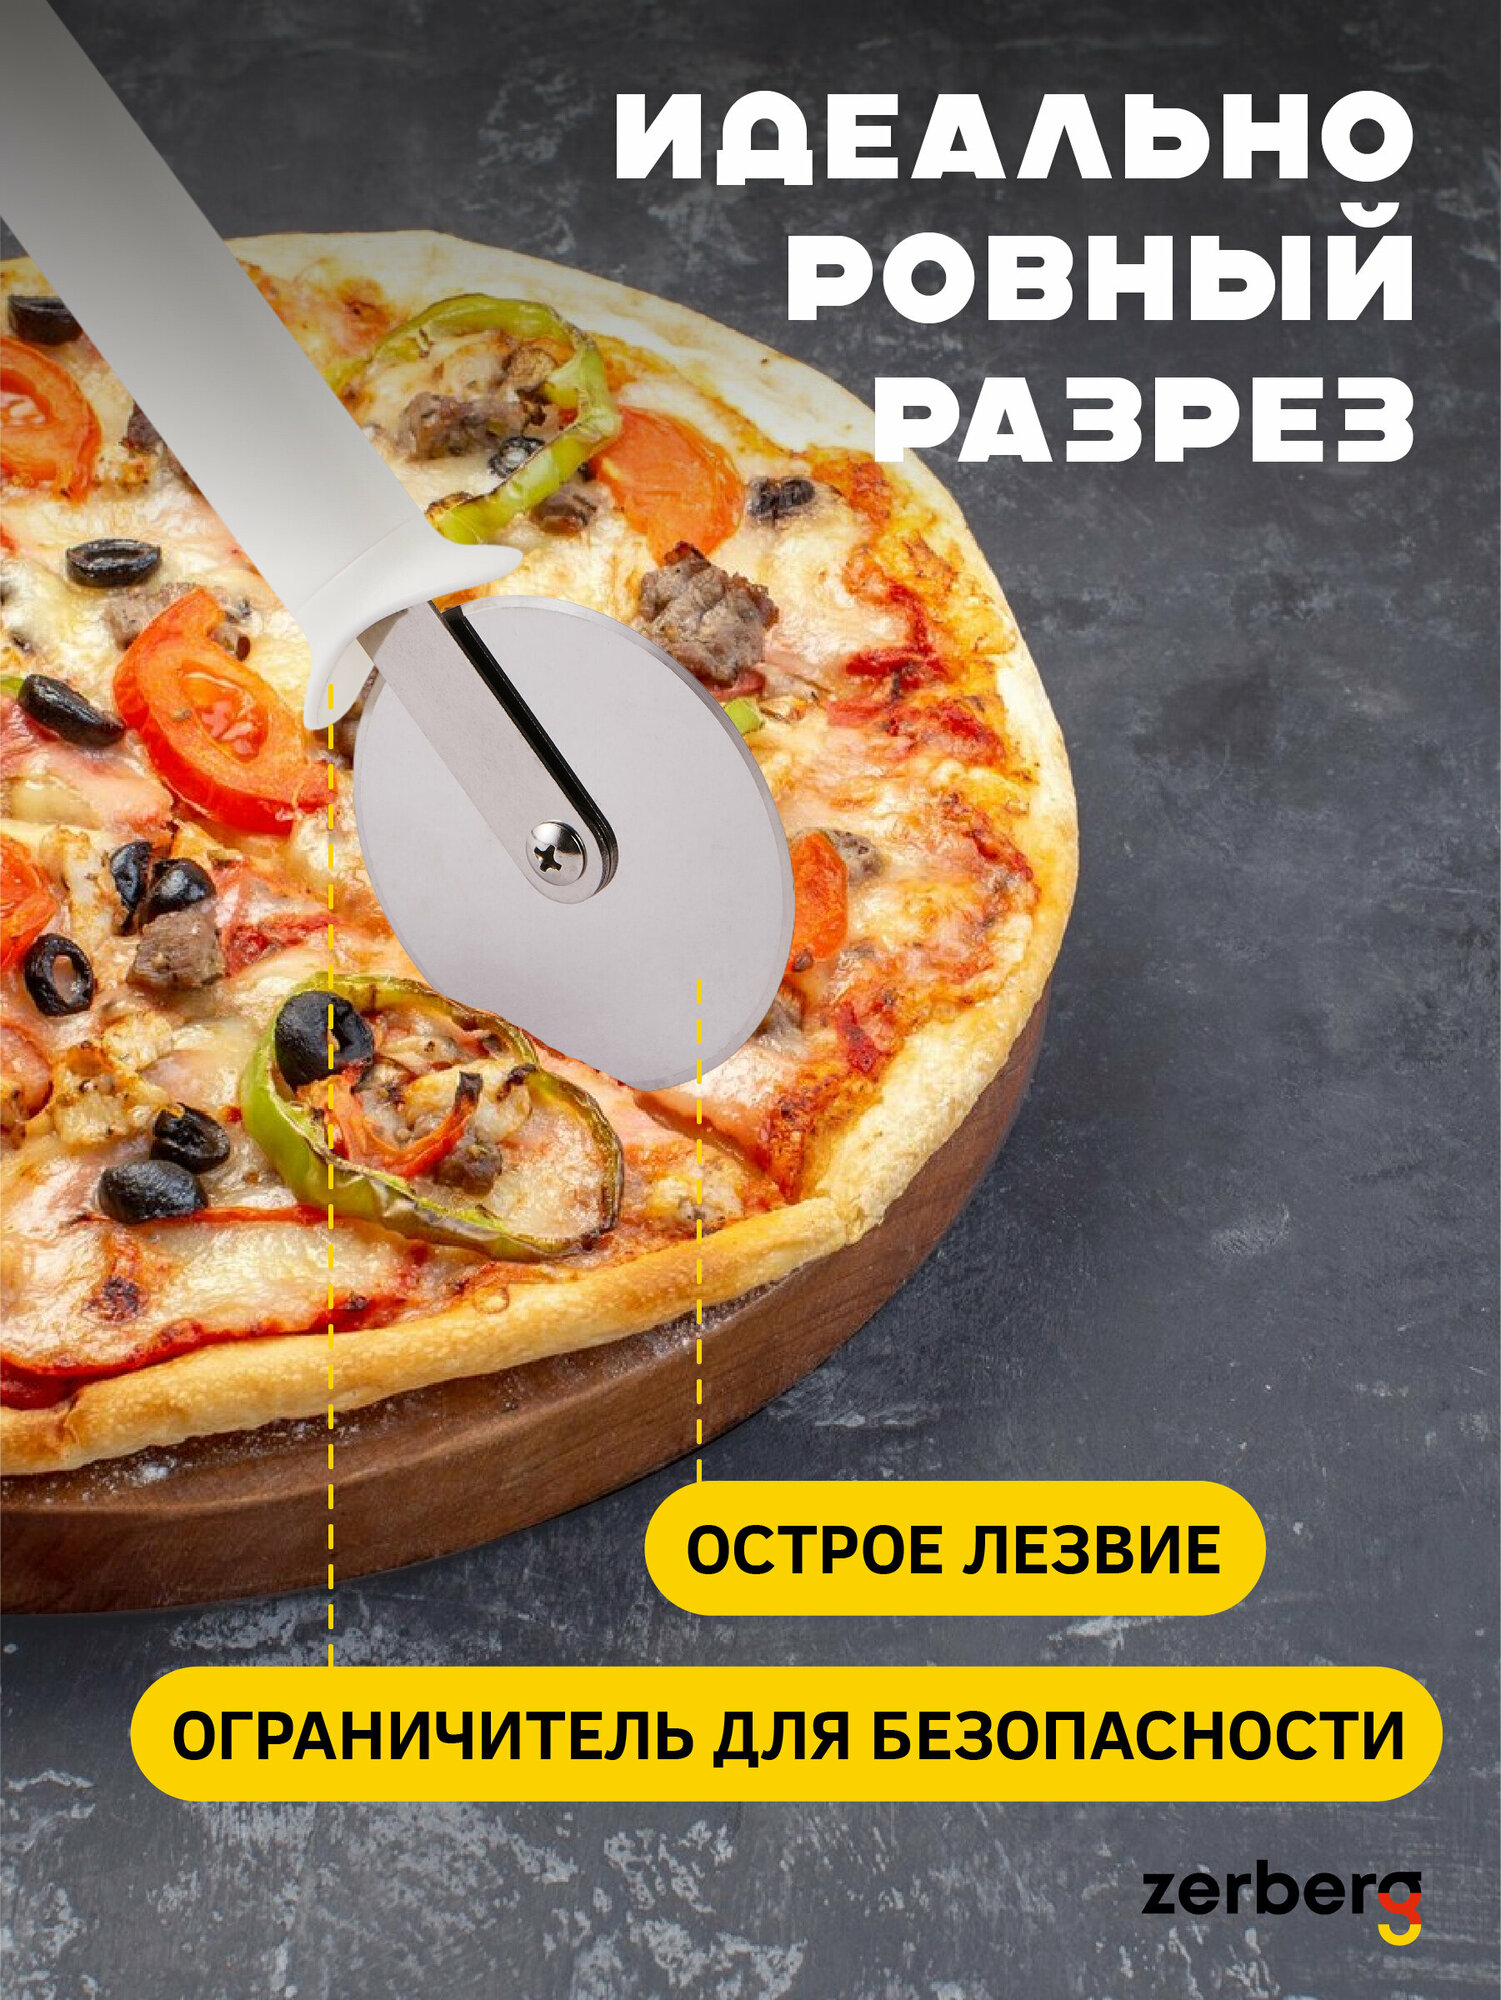 Нож для пиццы Zerberg